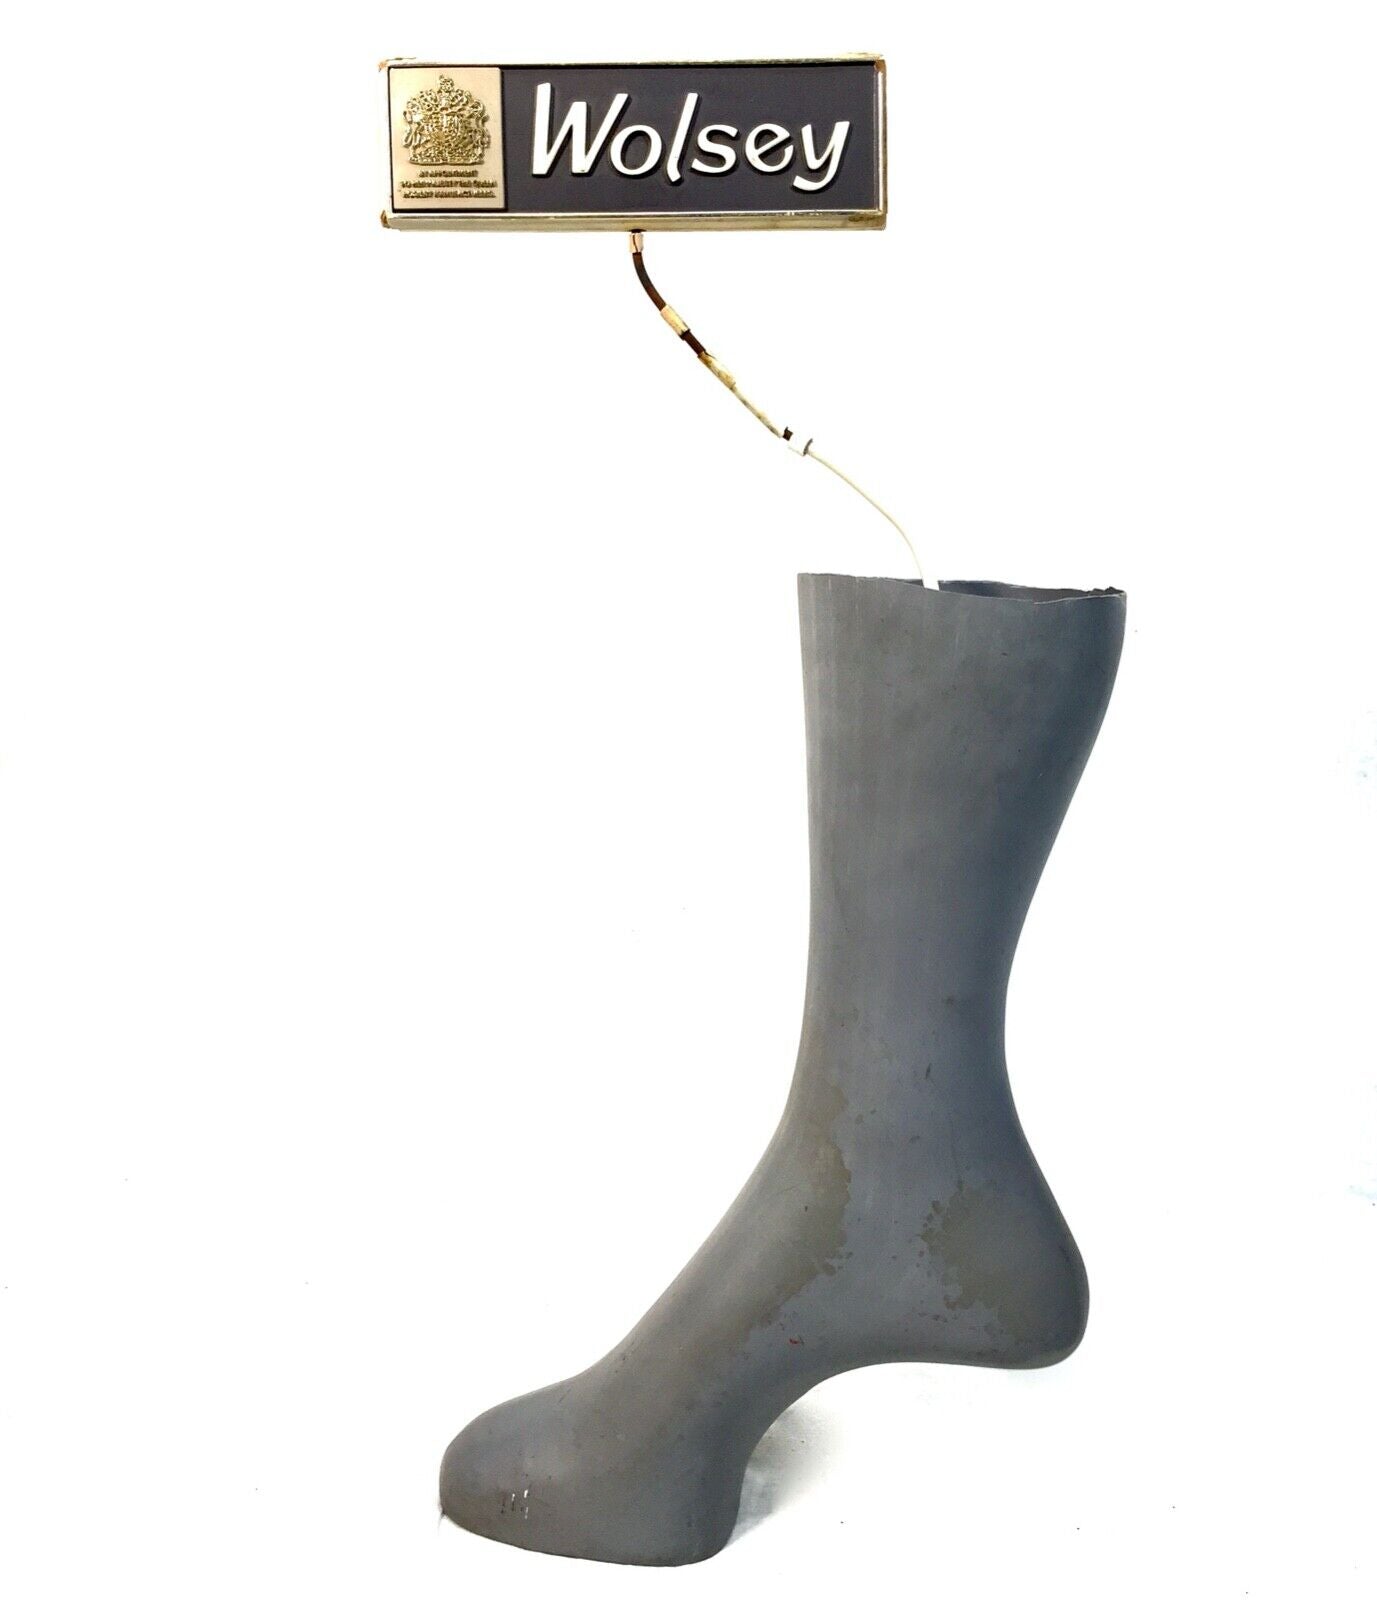 Antique Advertising - Wolsey Socks Hosiery Shop Display Stand & Sign / Vintage